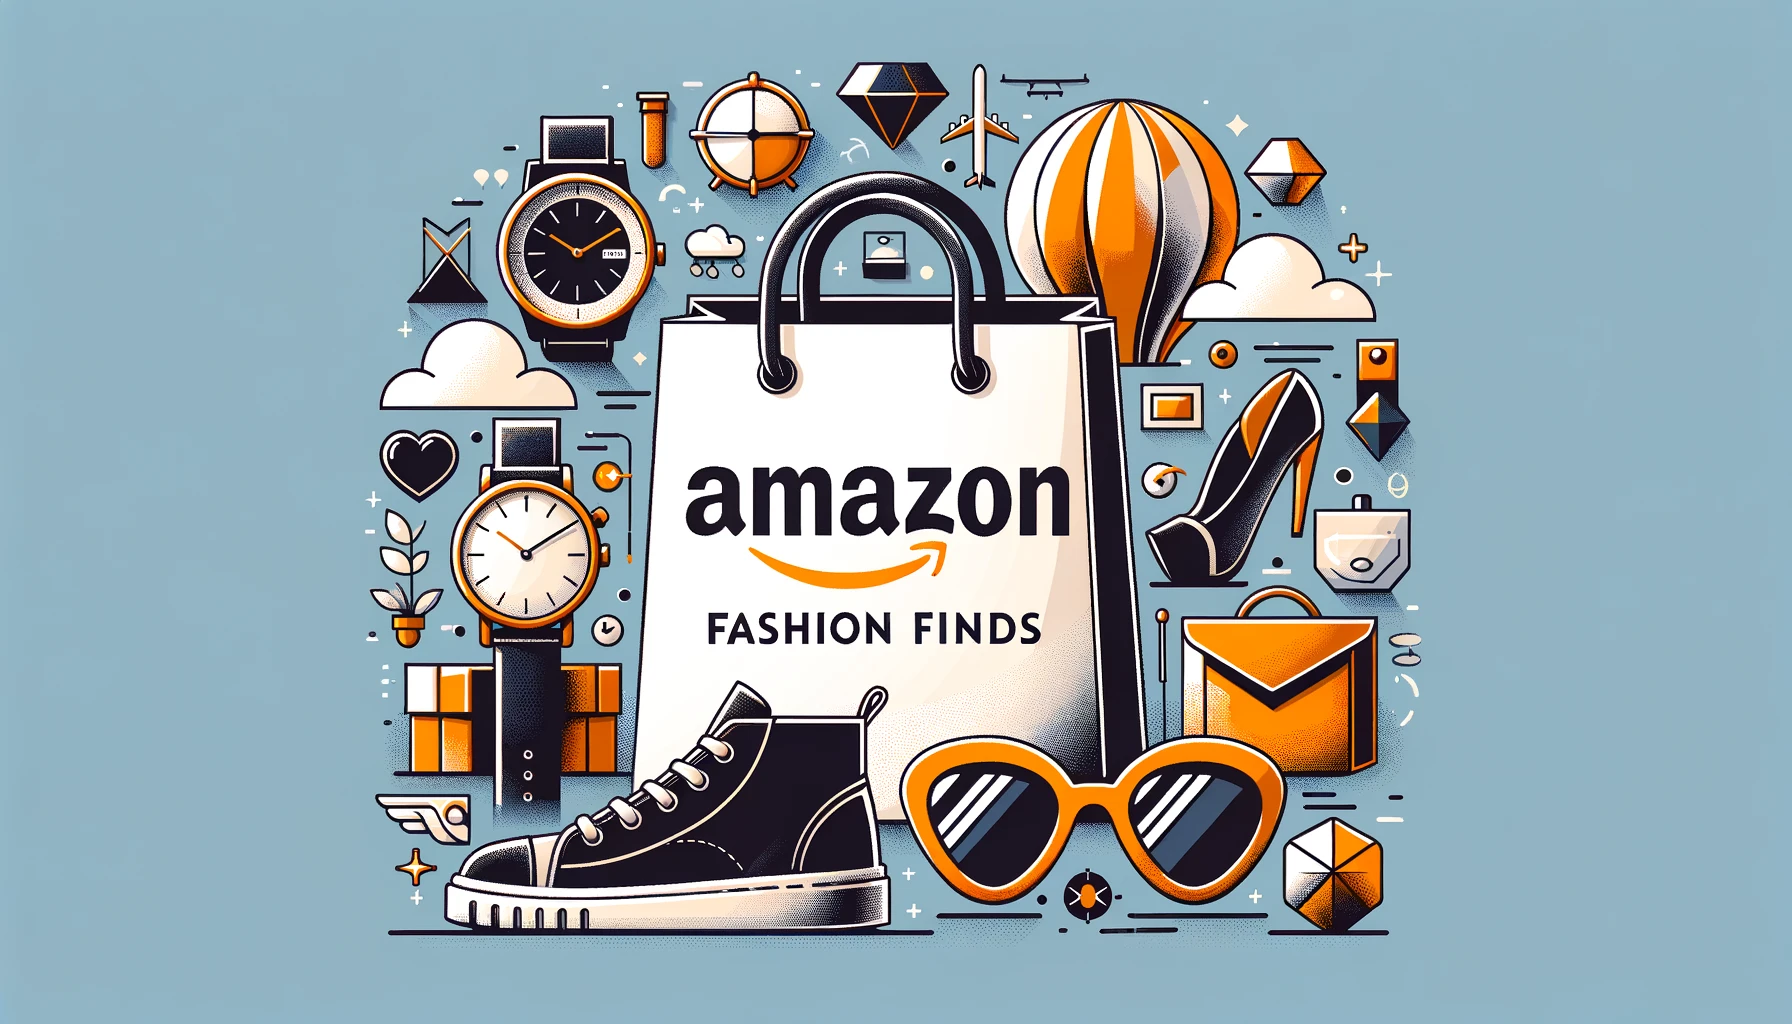 Amazon fashion finds fashion niche ideas